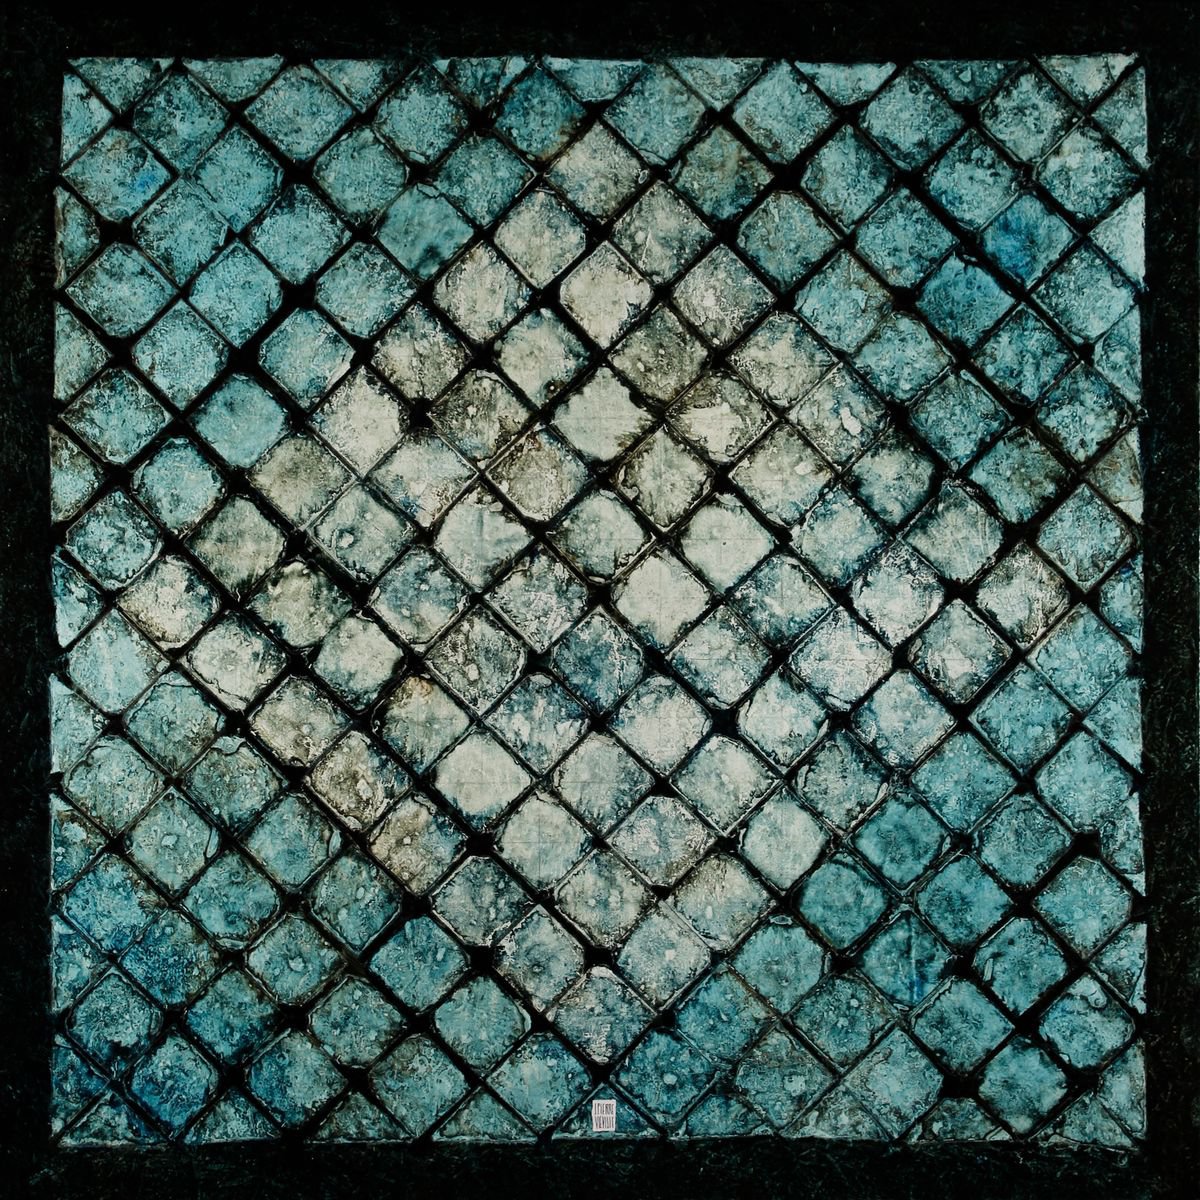 Les bleus vitraux, abstract art by Vieville Jean-Pierre